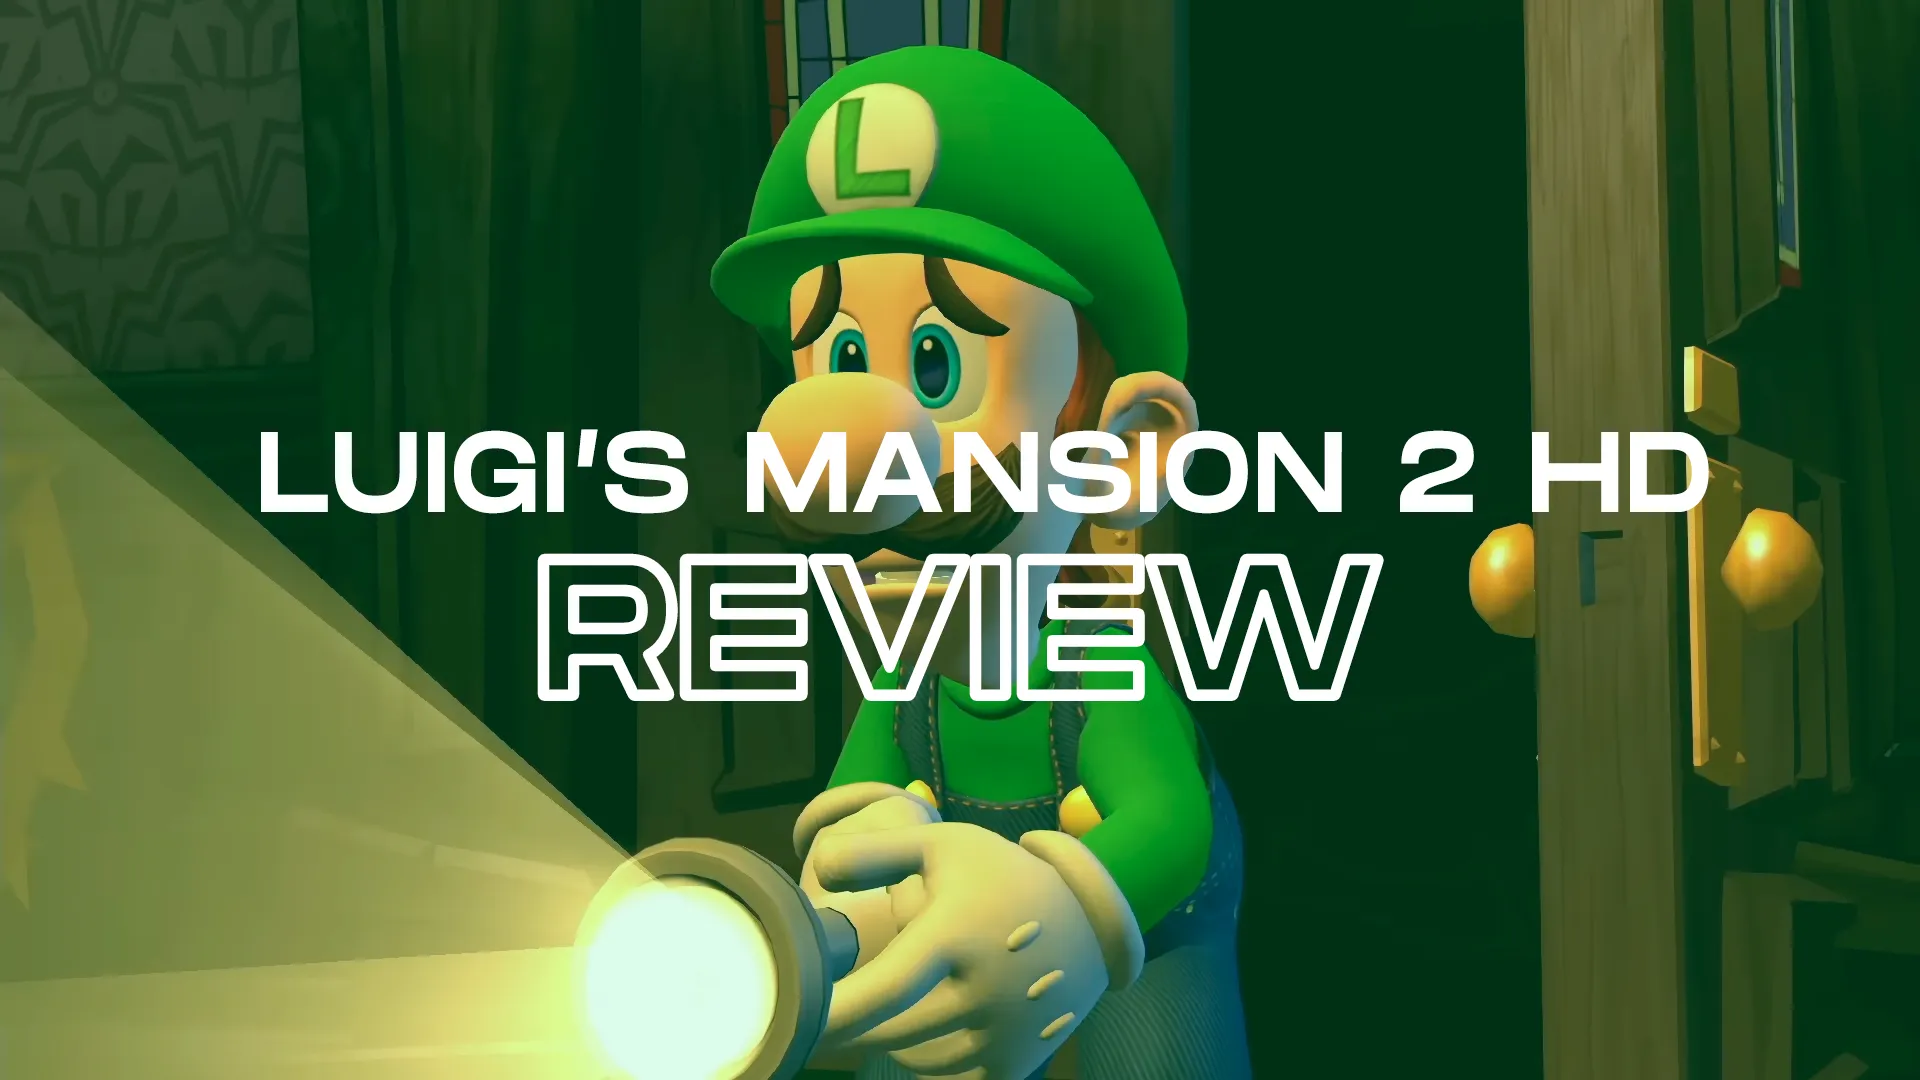 luigis mansion 2 hd review header